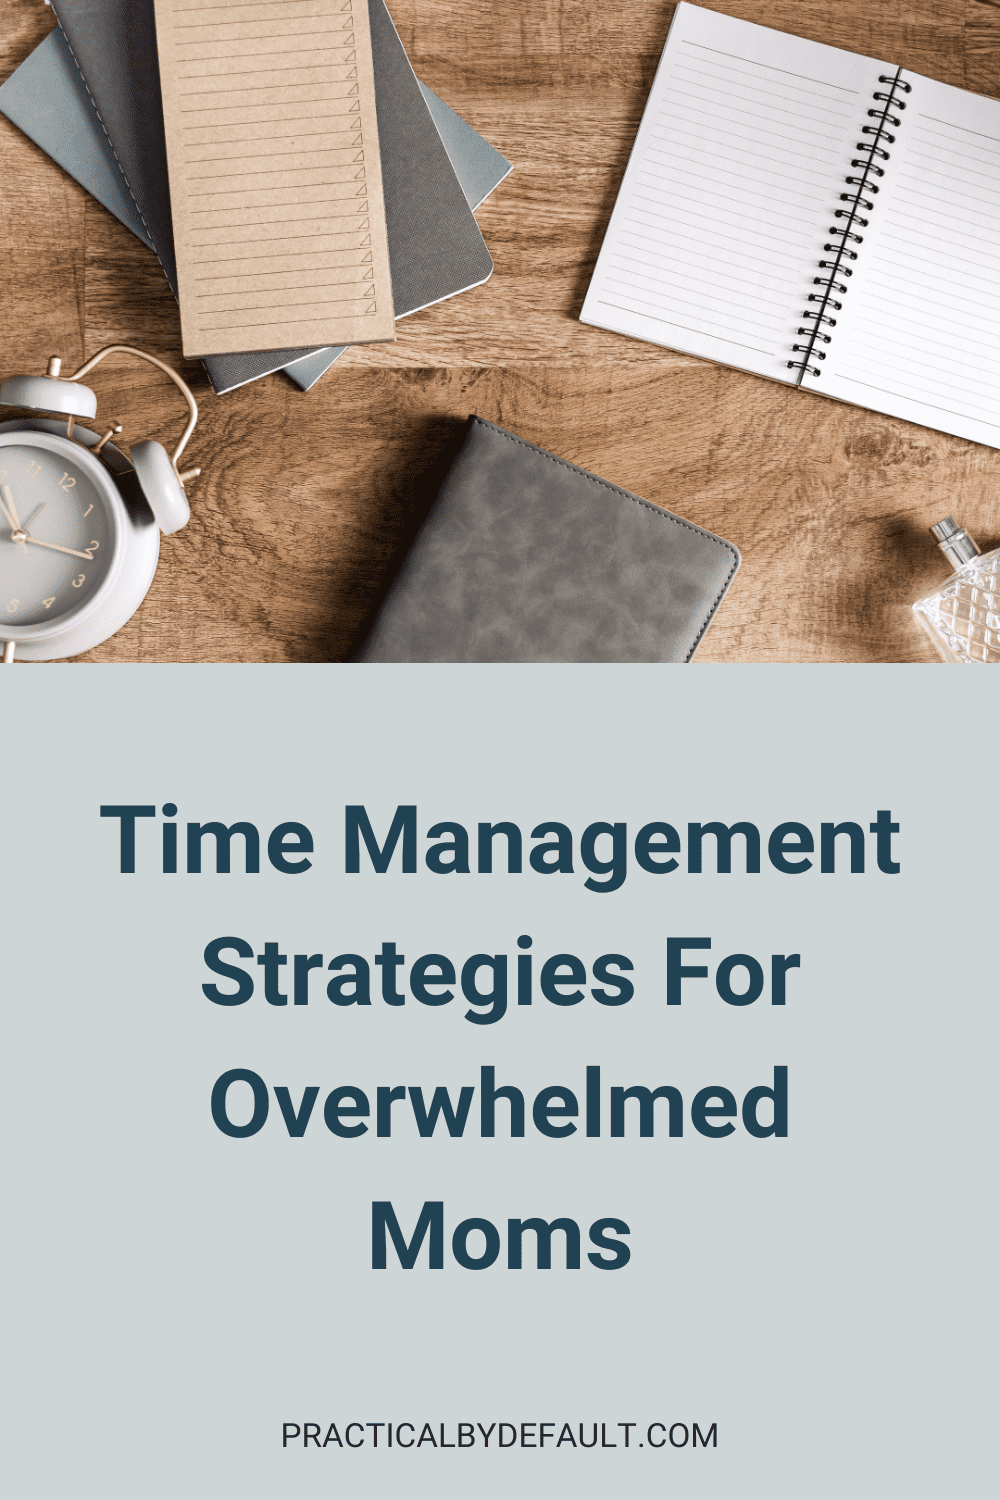 Time Management Strategies For Overwhelmed Moms